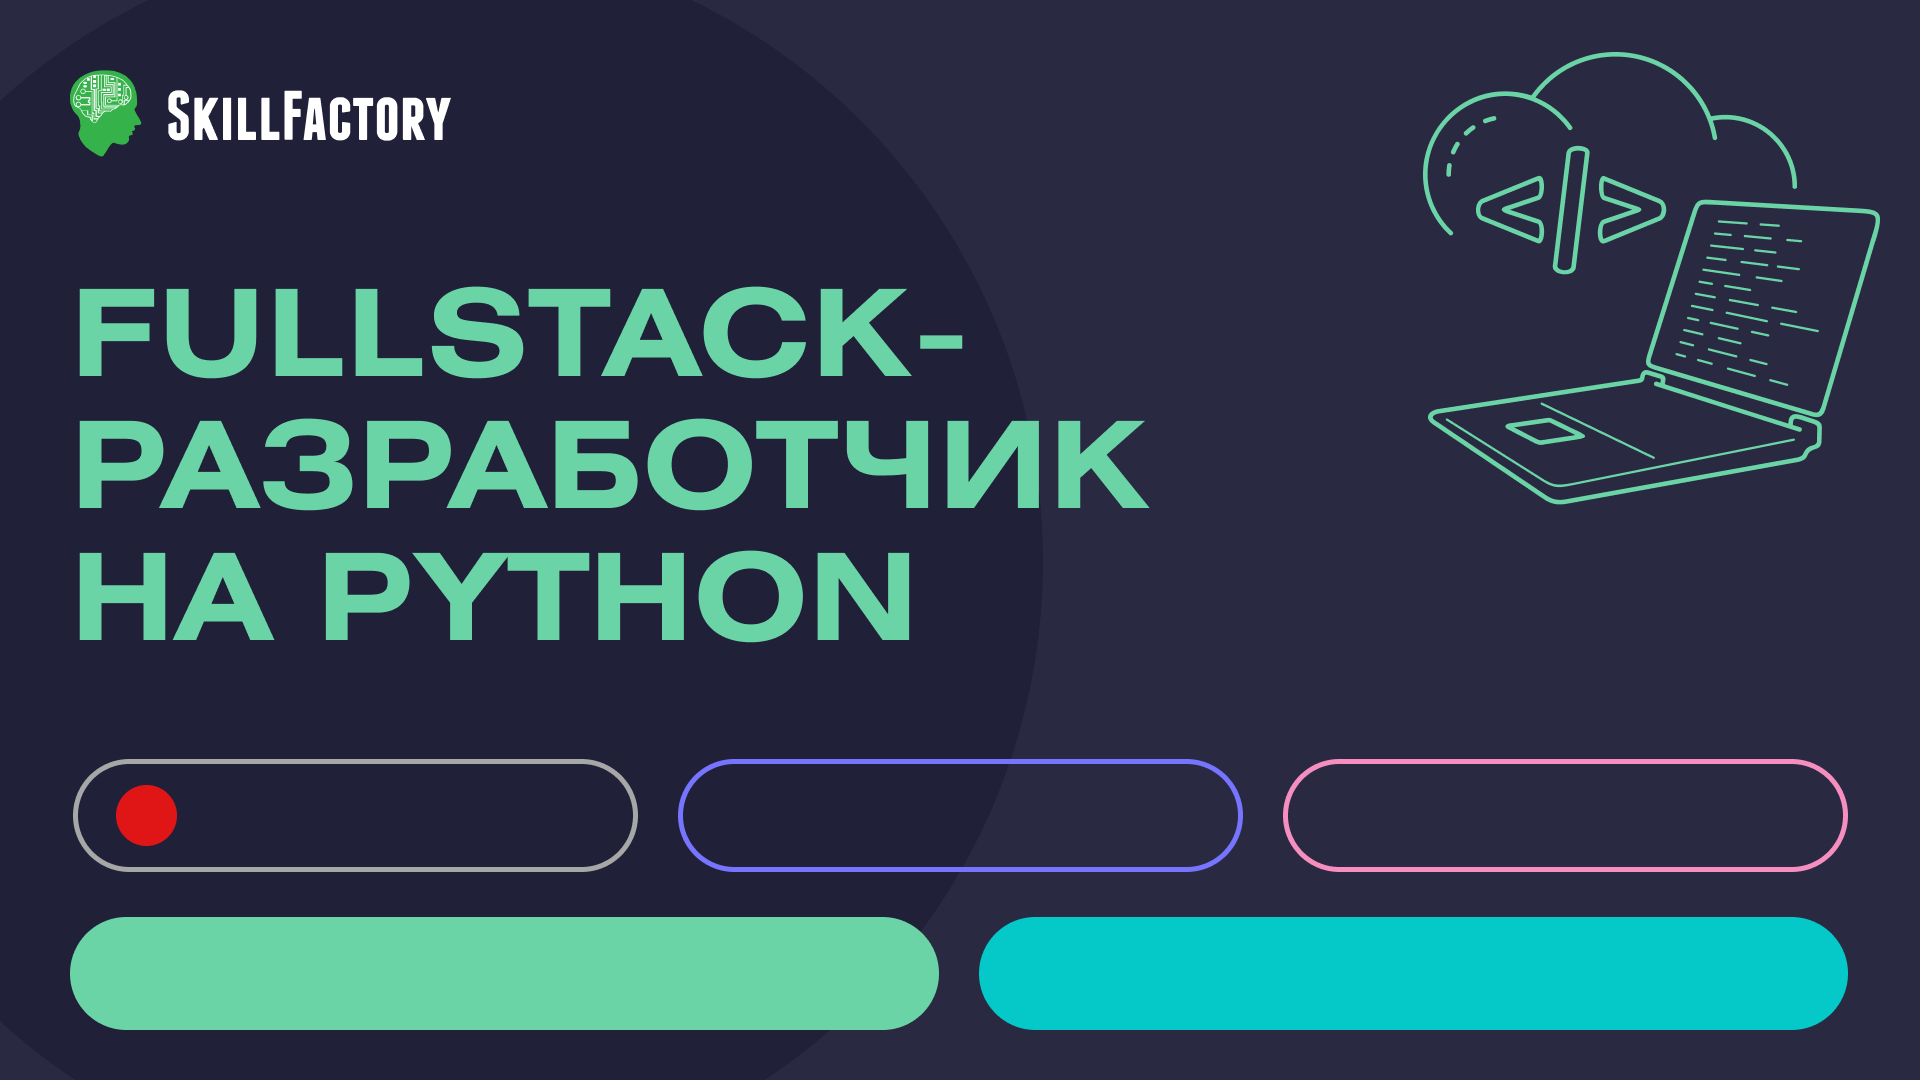 Fullstack-разработчик на Python